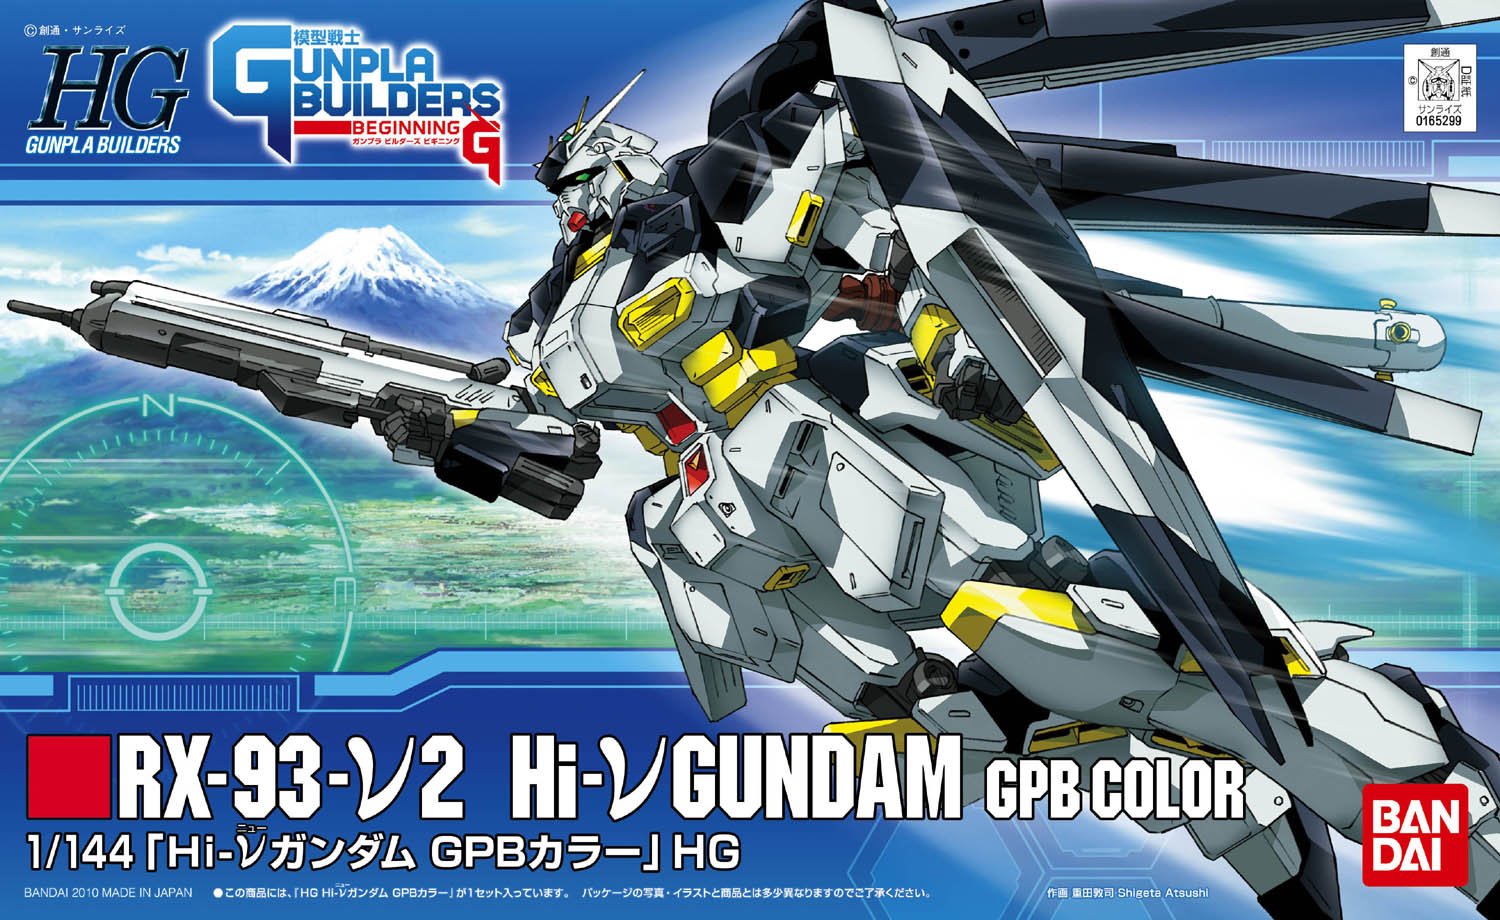 Gunjap Wallpaper Size Images Hg 1 144 Rx 93 Hi Nu Gundam Gpb Color